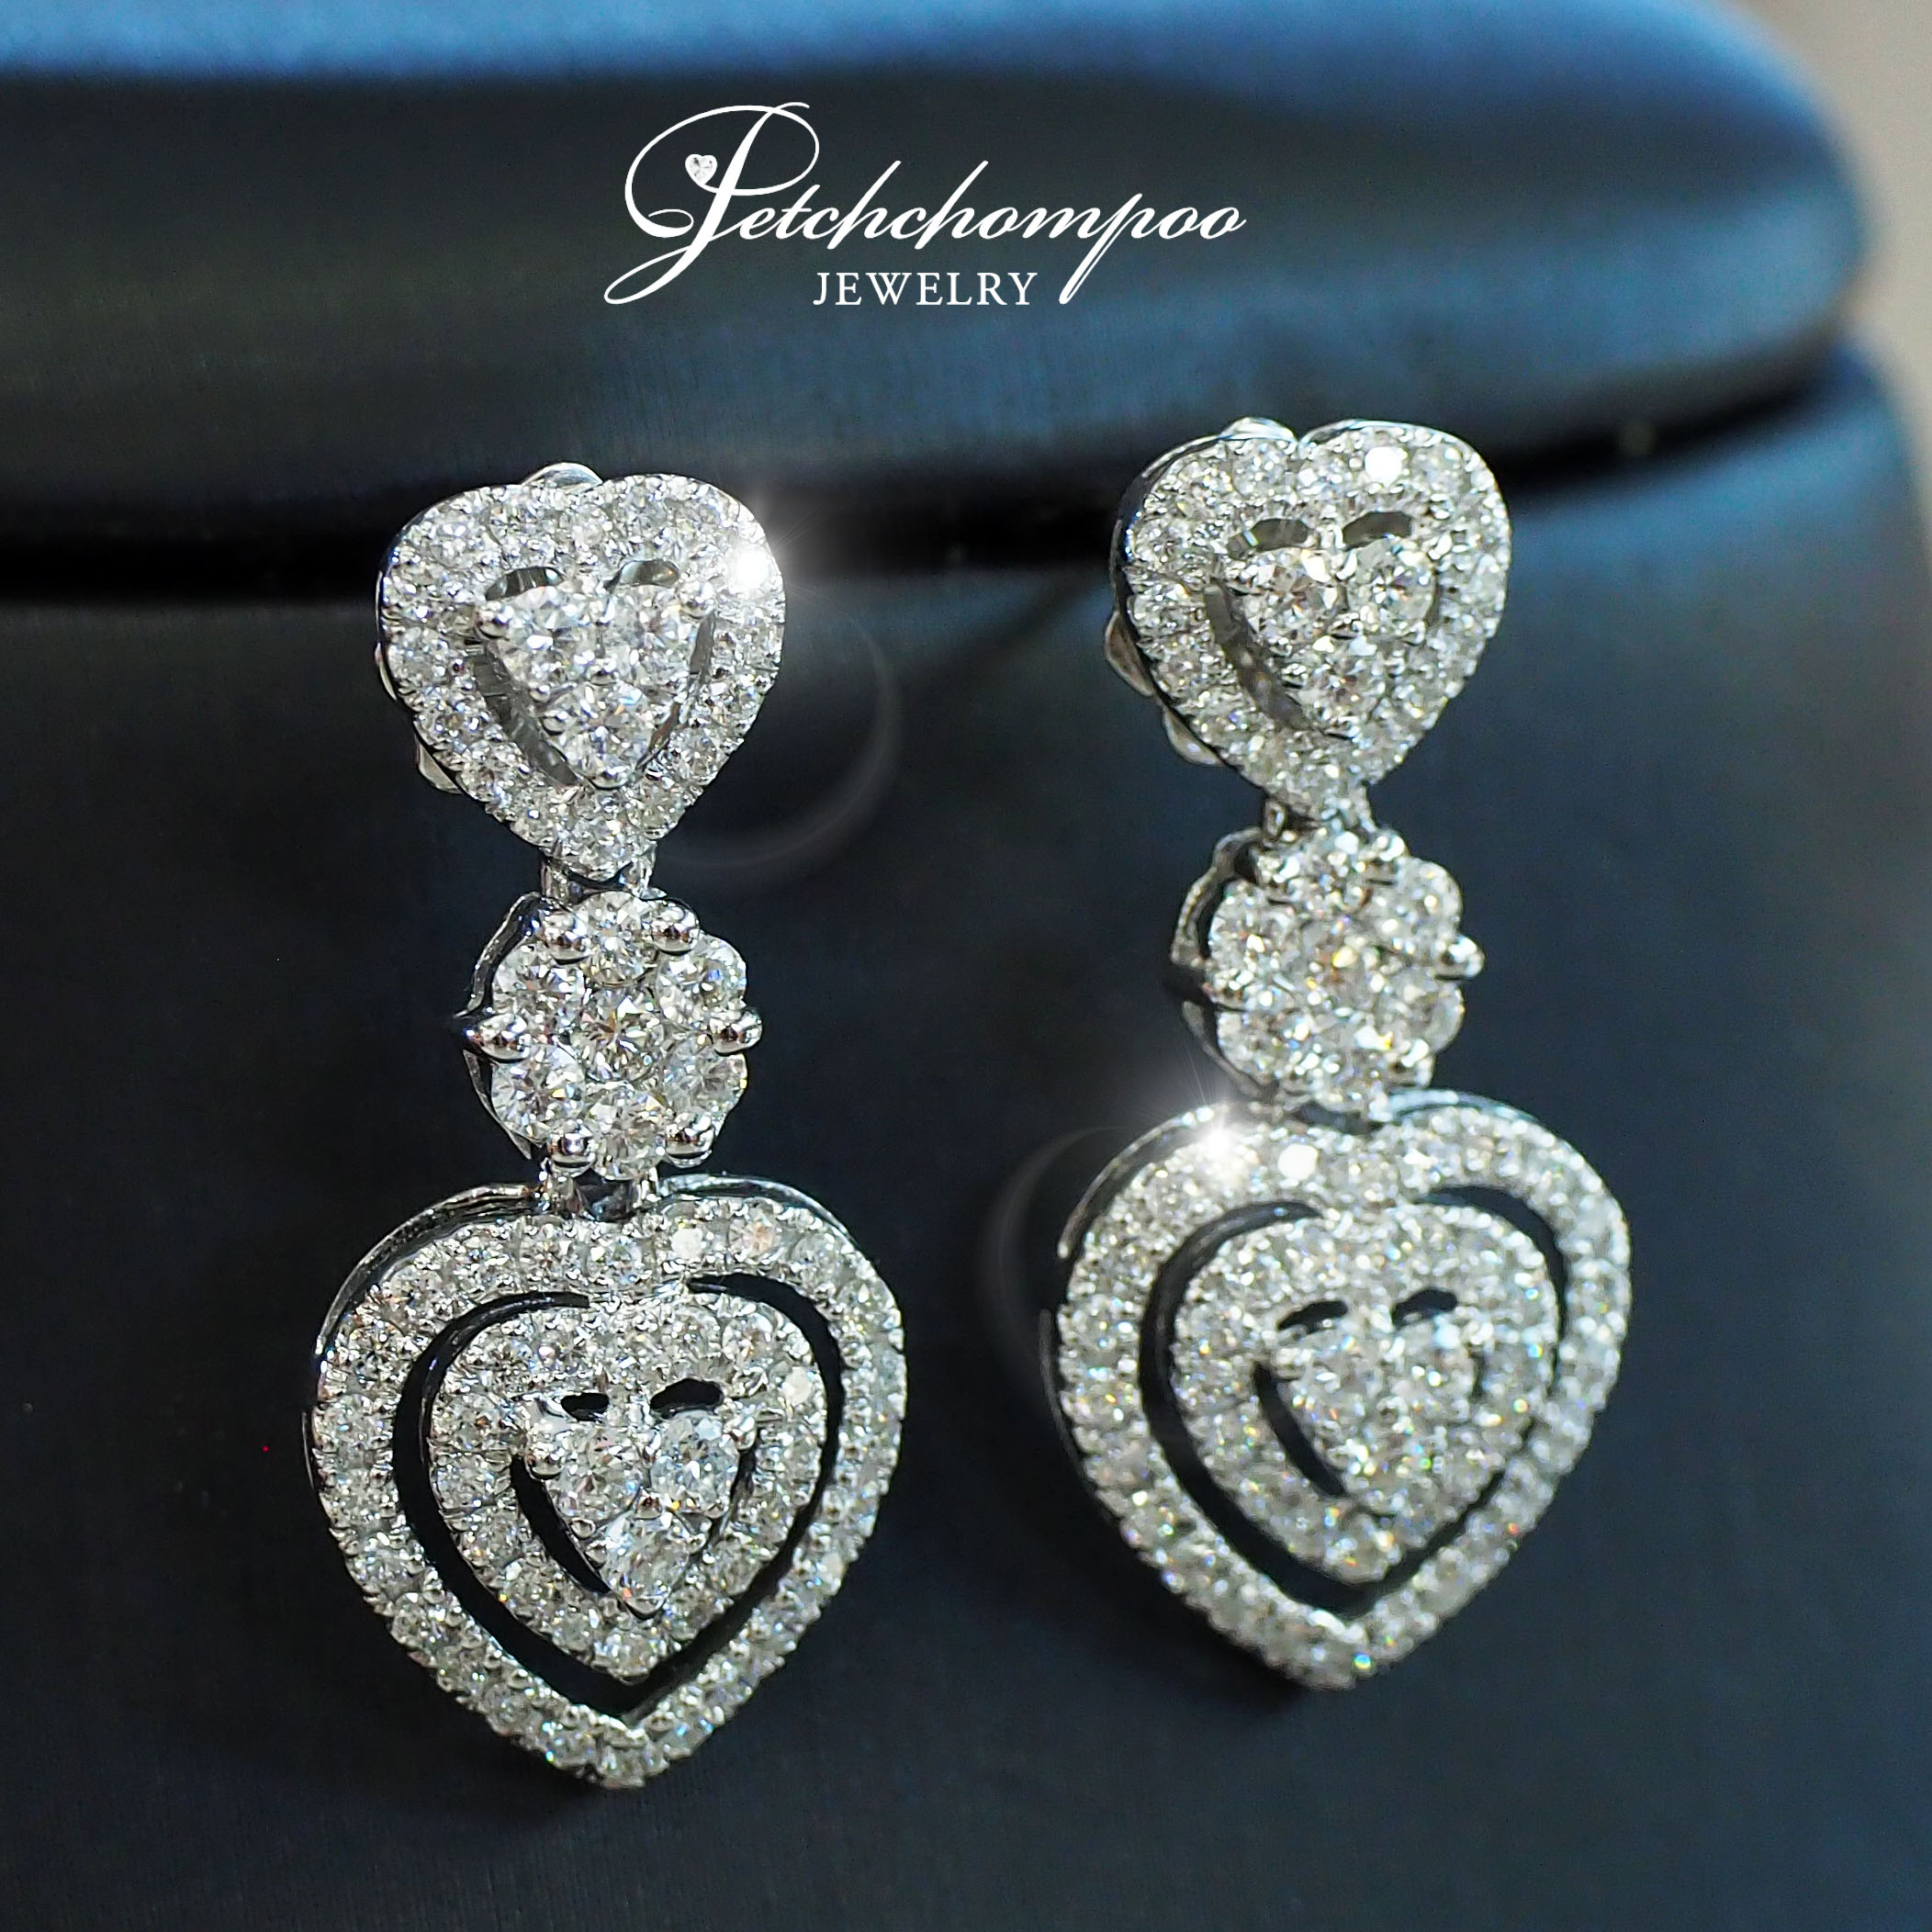 [27089] Heart shape diamond earrings 1.66 carats  99,000 